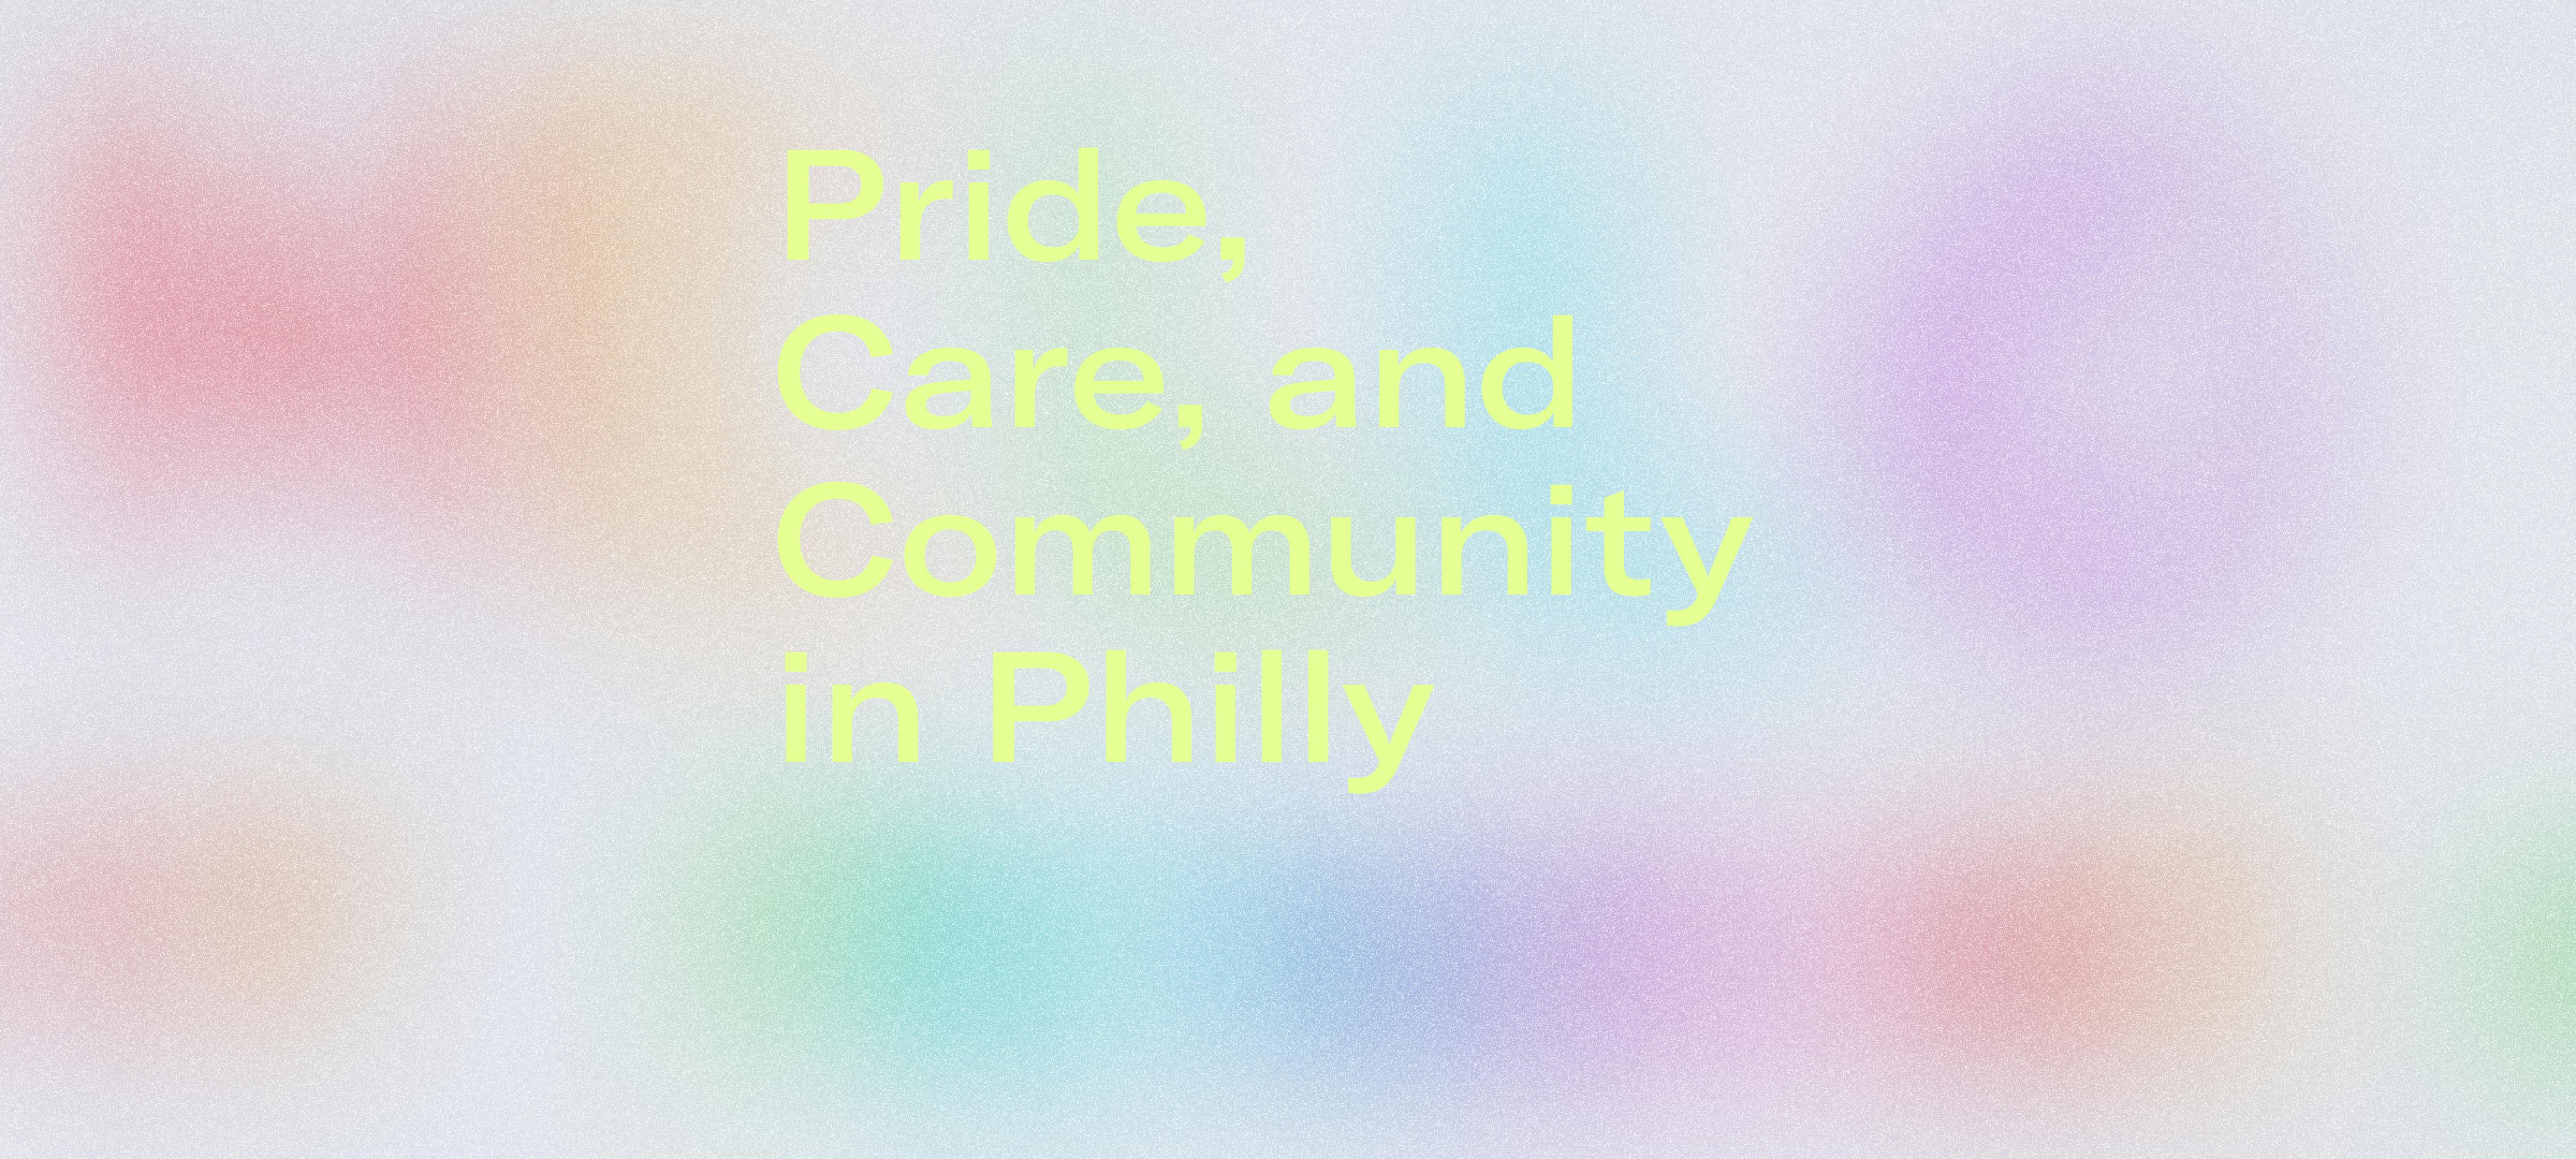 Pride, Care, and Community: Philadelphia